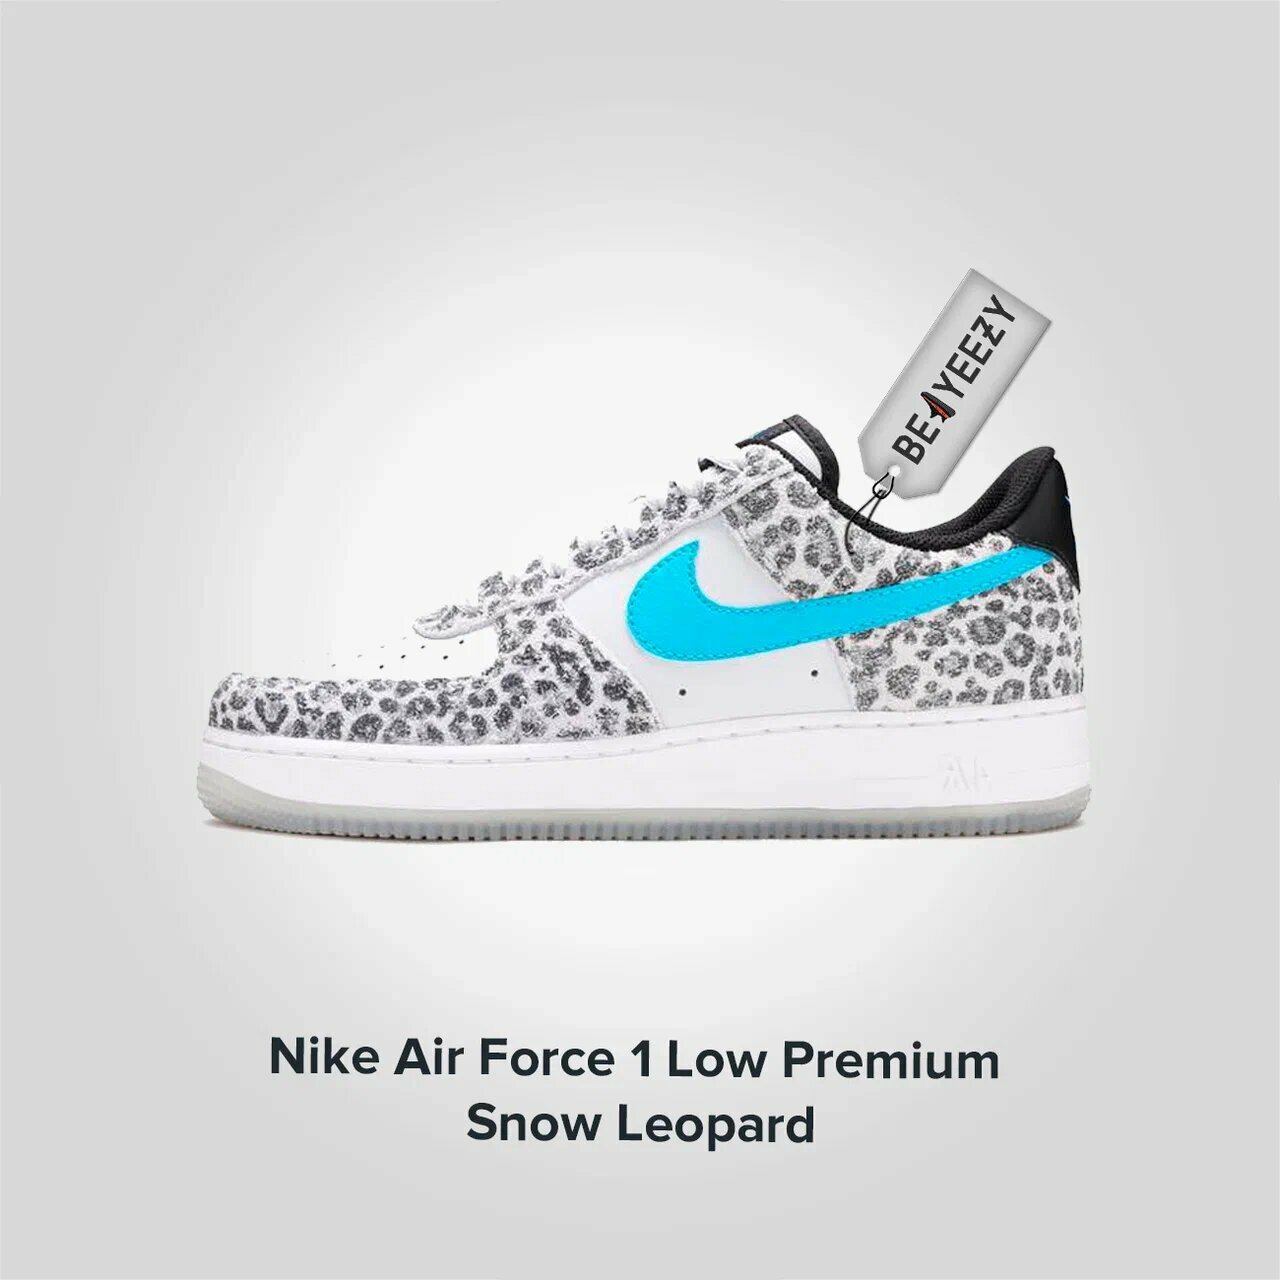 Nike Air Force 1 Low Premium Snow Leopard